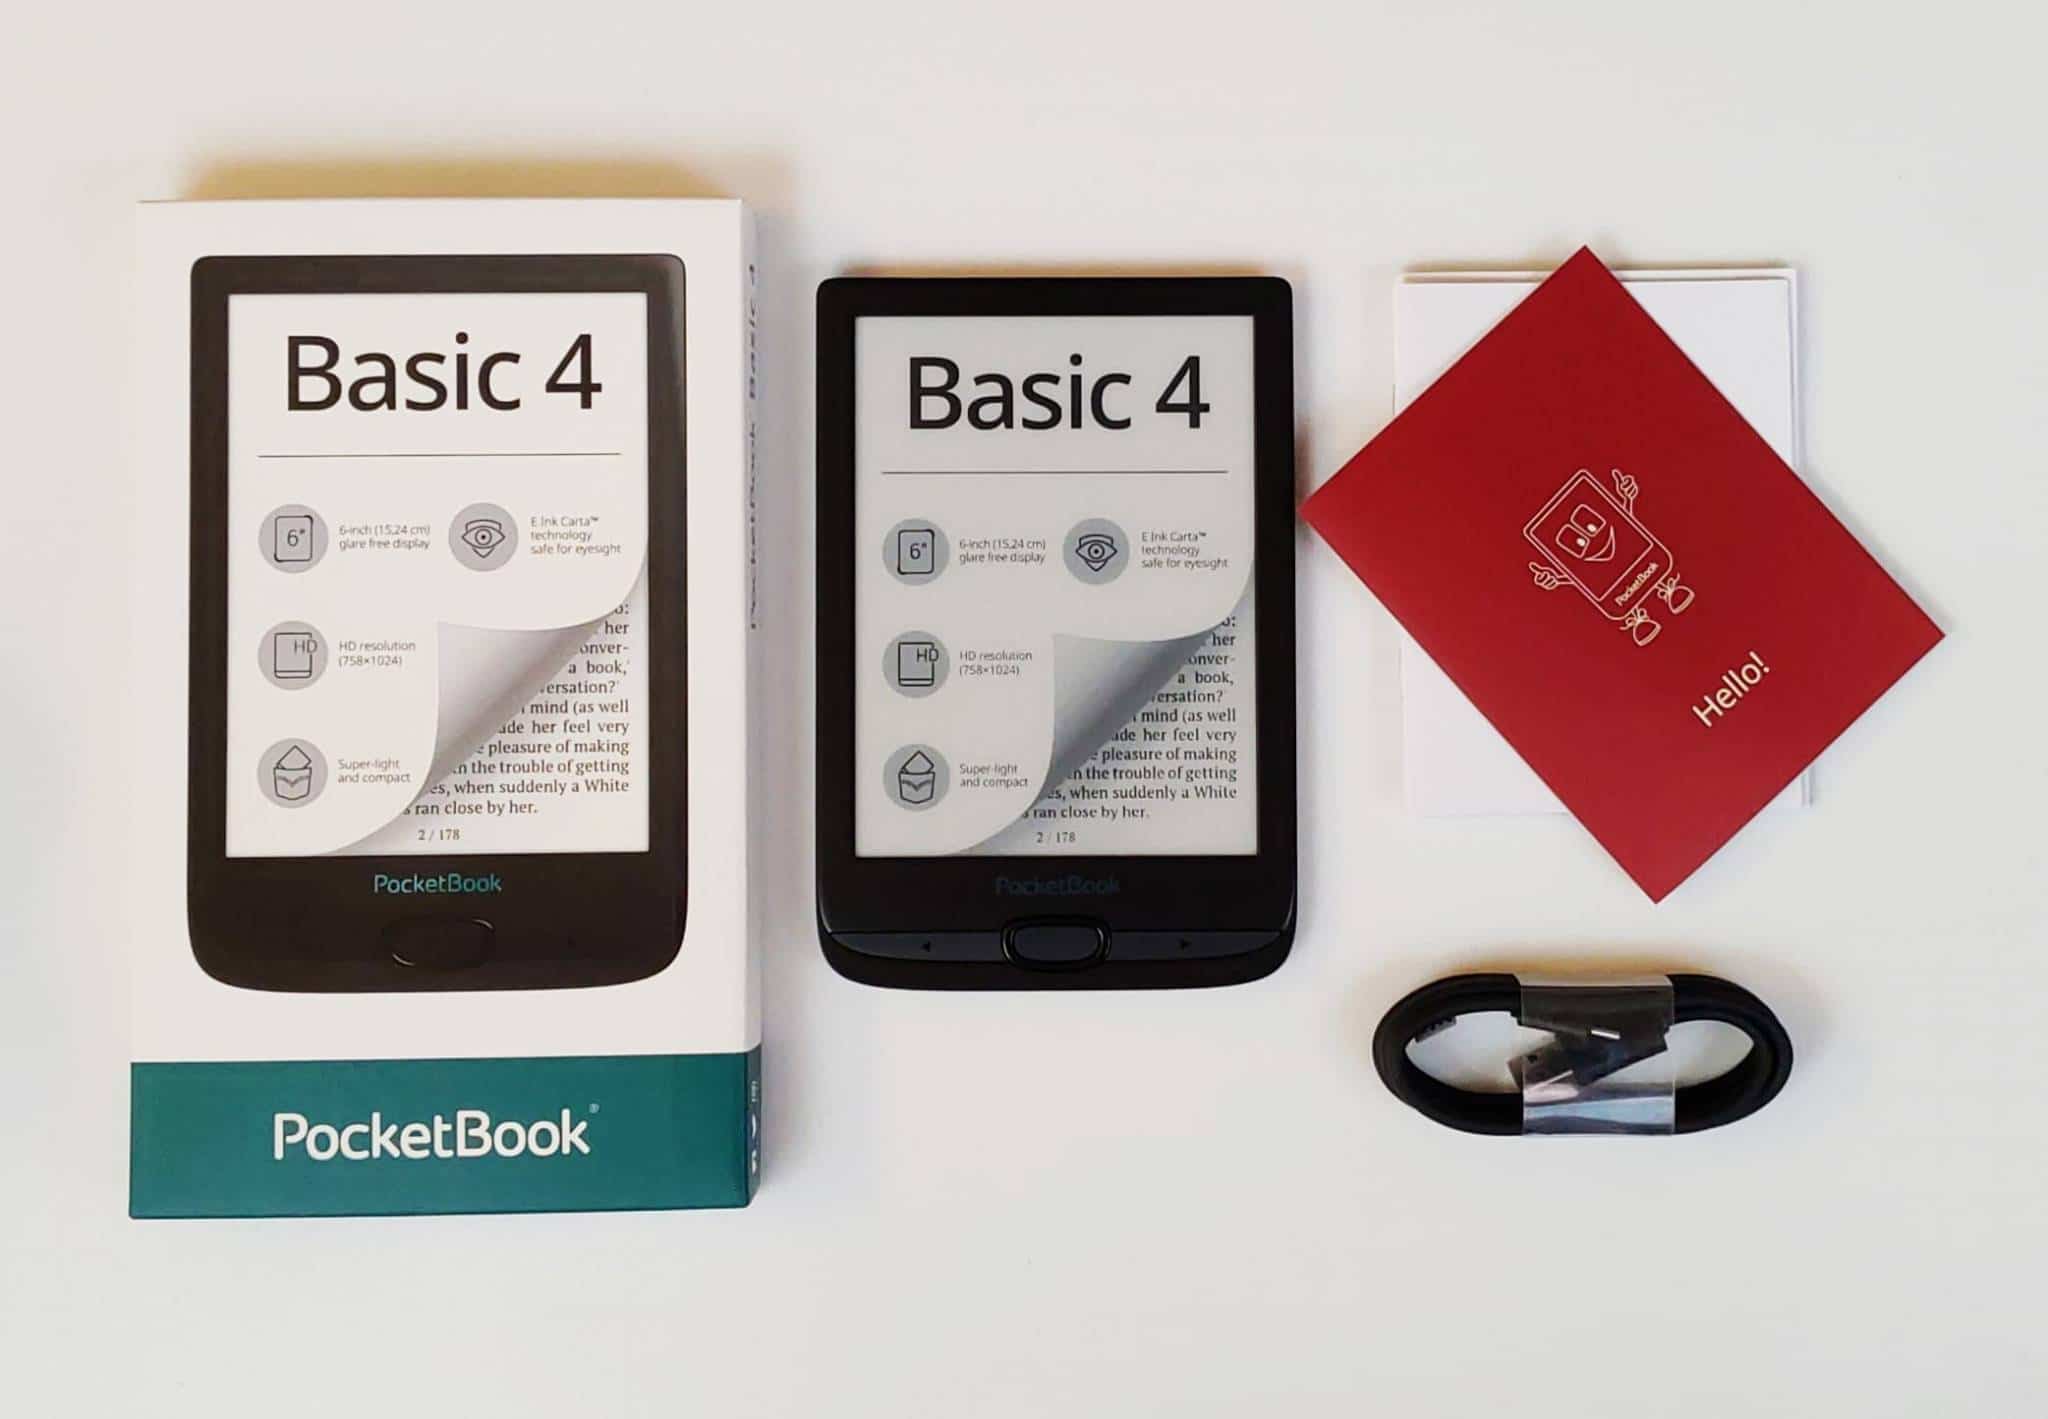 Pocketbook Basic 4